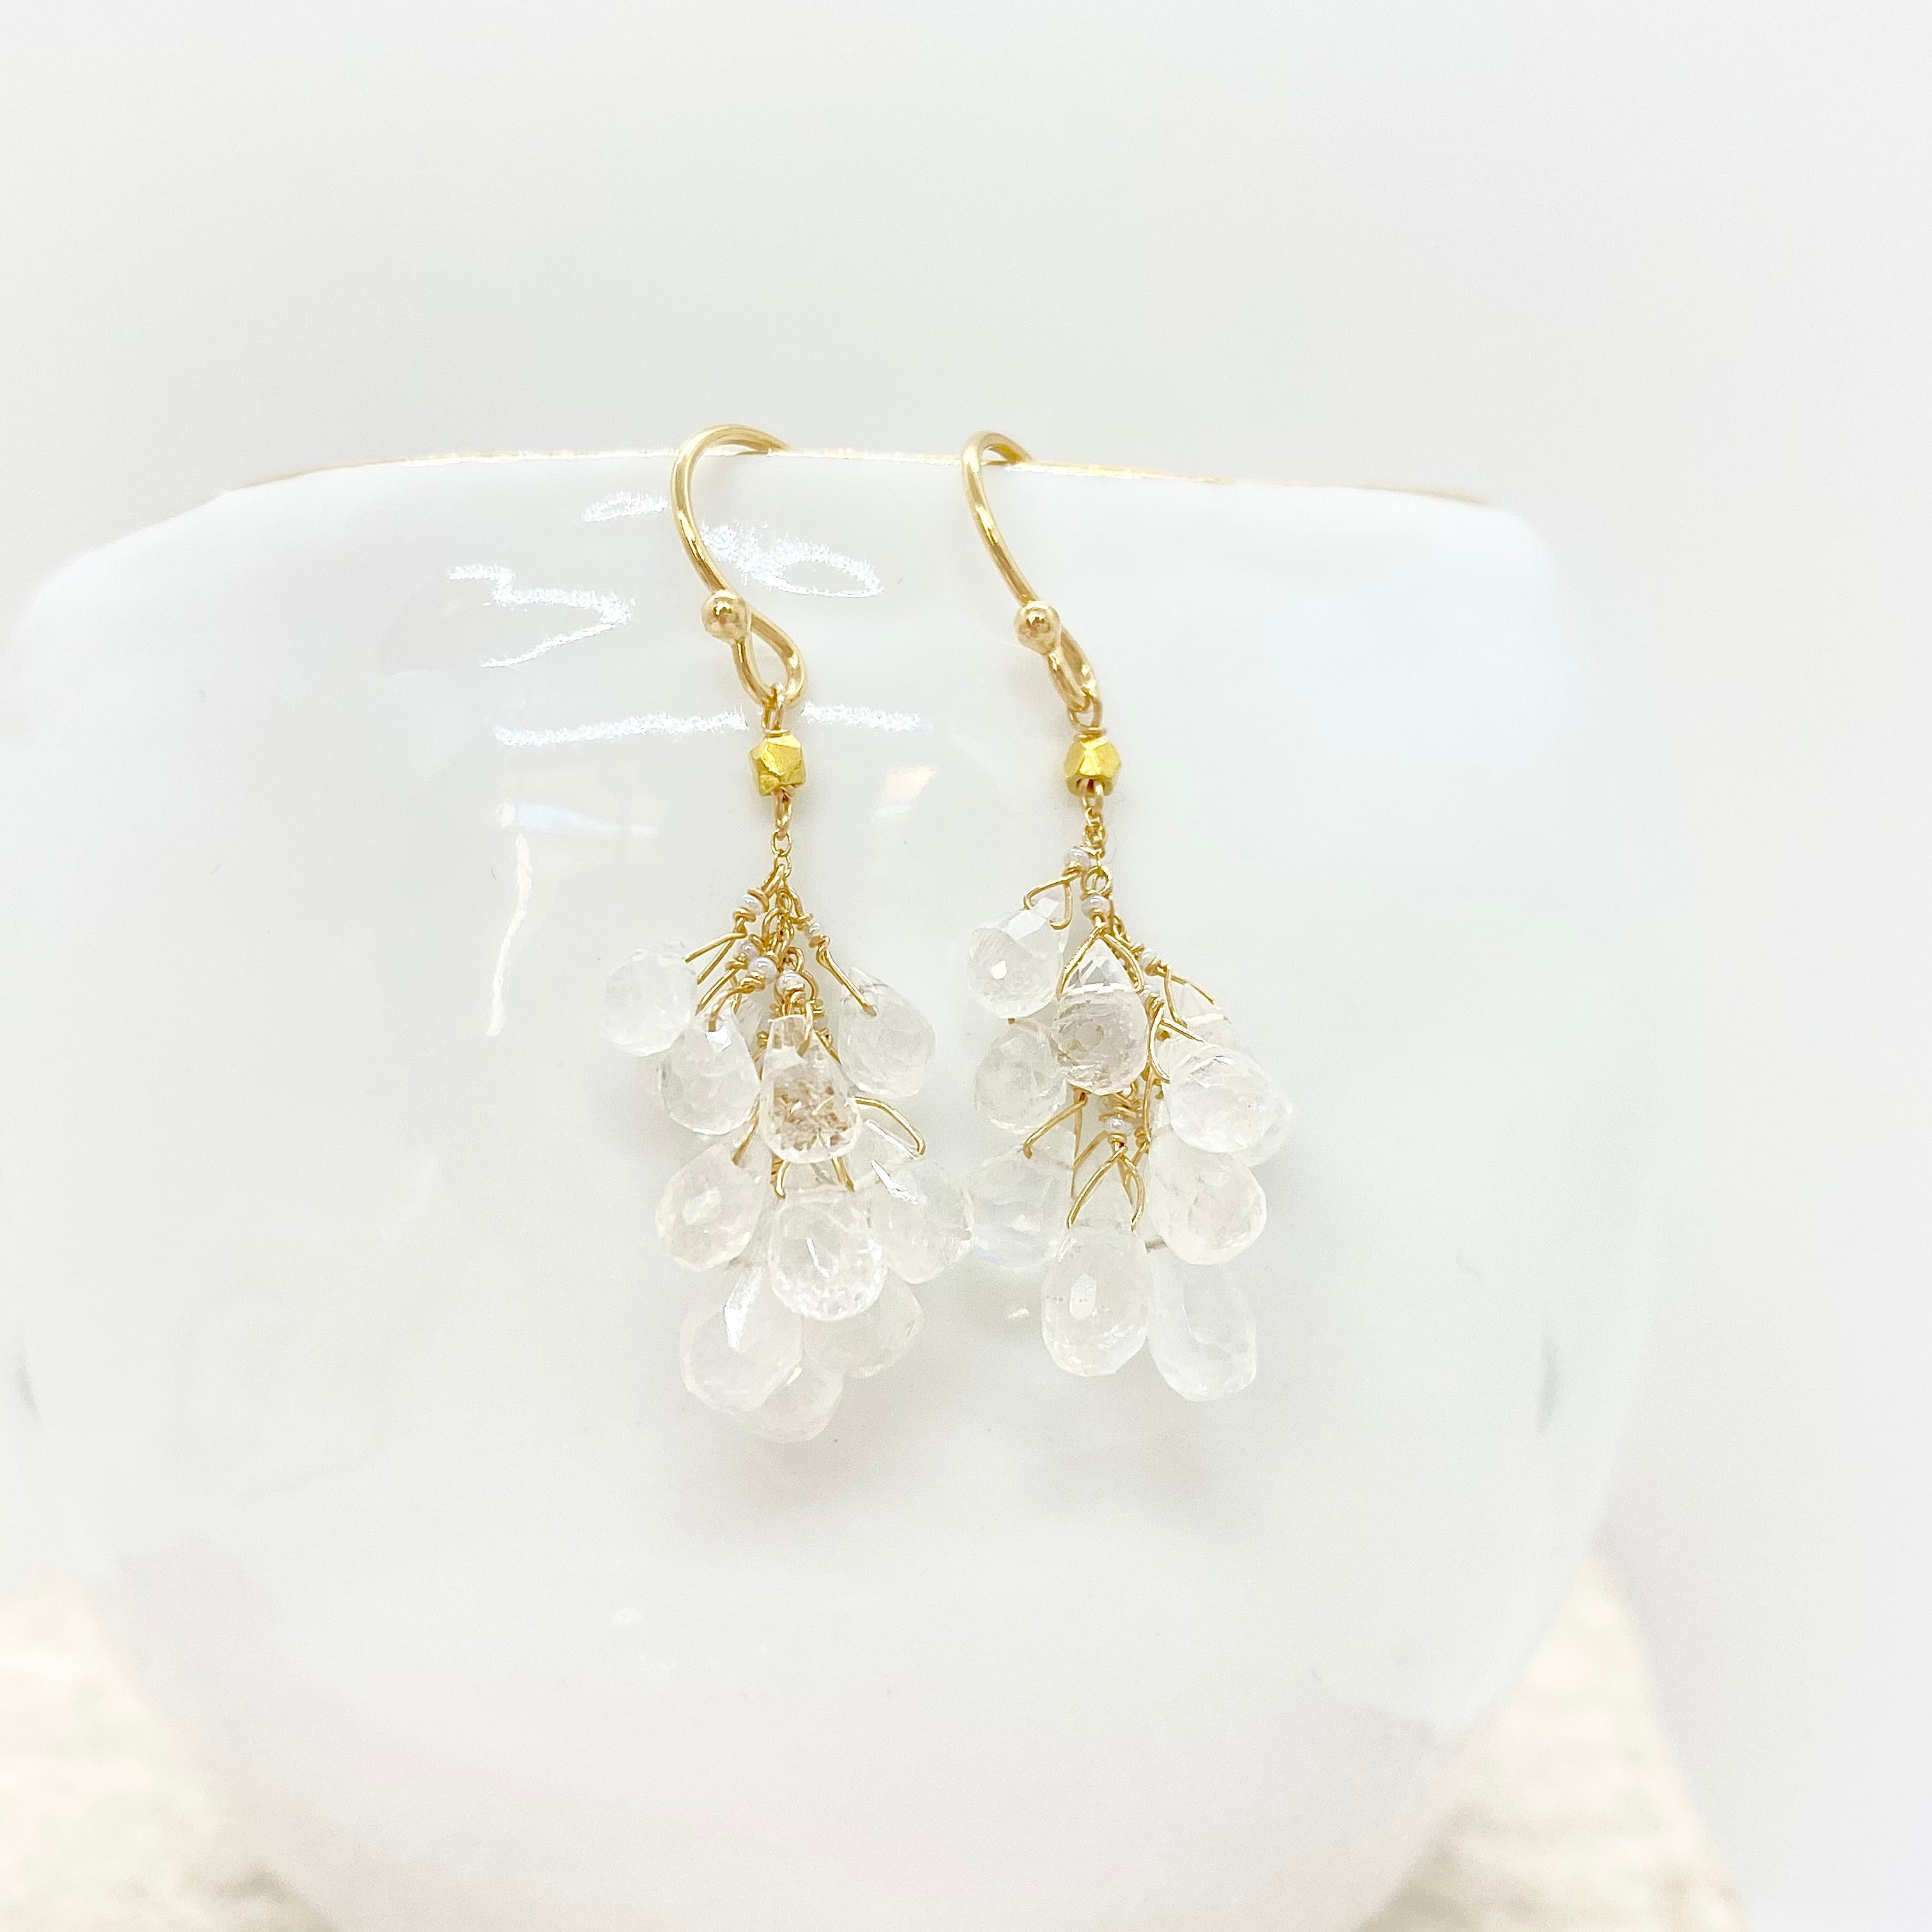 14k Gold Earrings w/ Moonstone, Antique Italian Beads & 18k Gold Nuggets